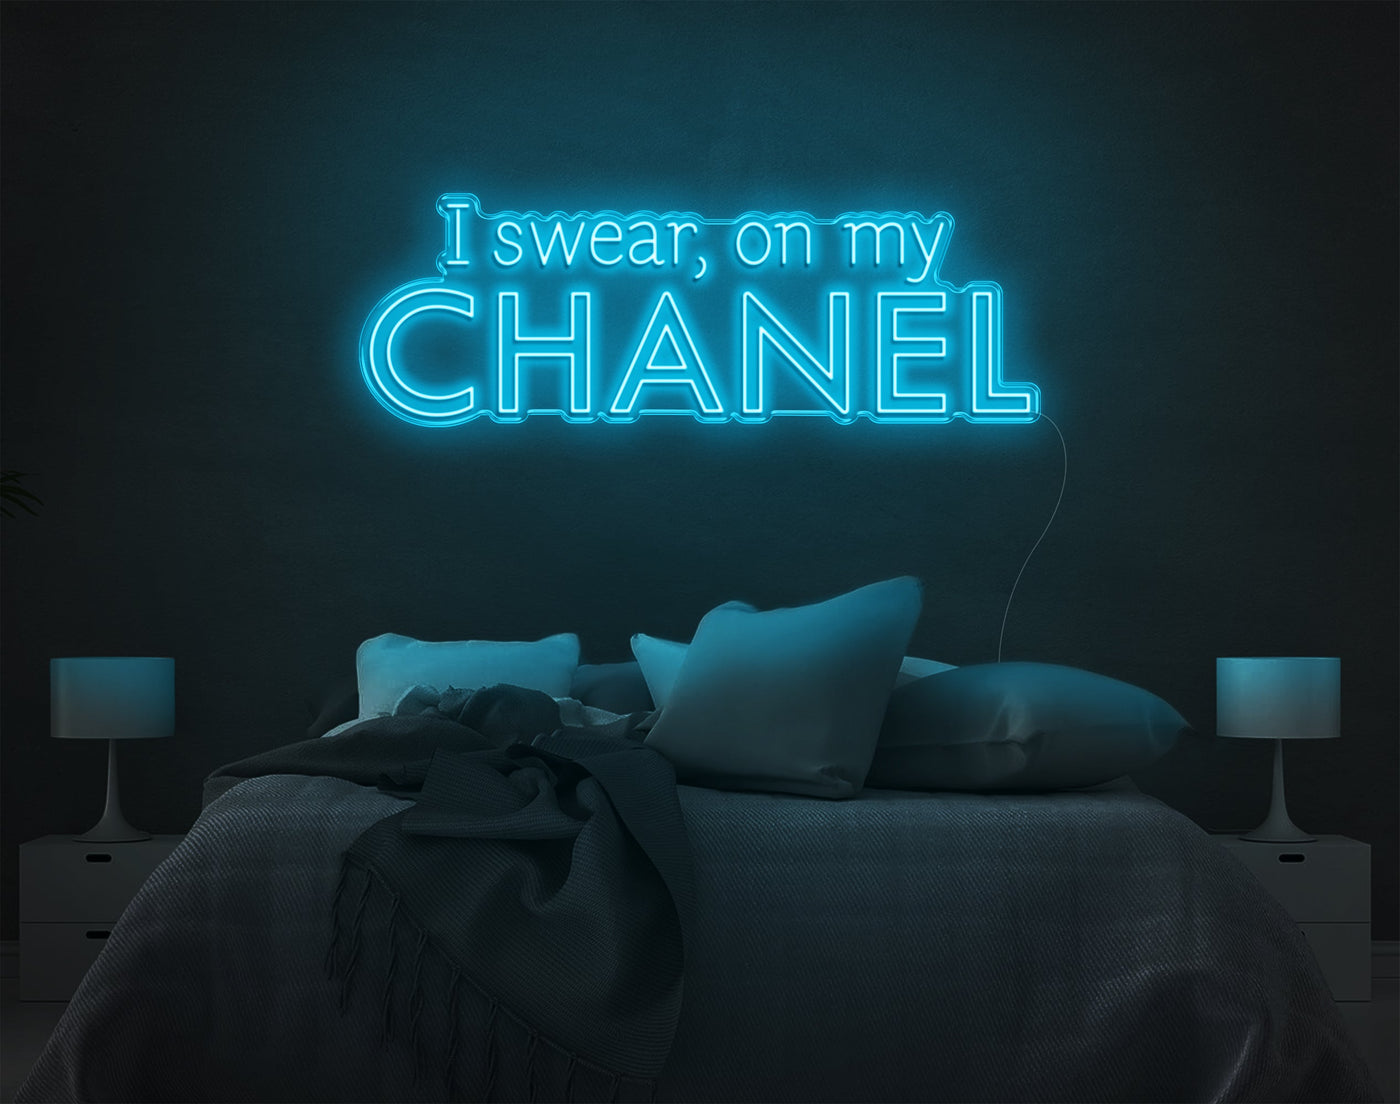 Chanel Neon Light 